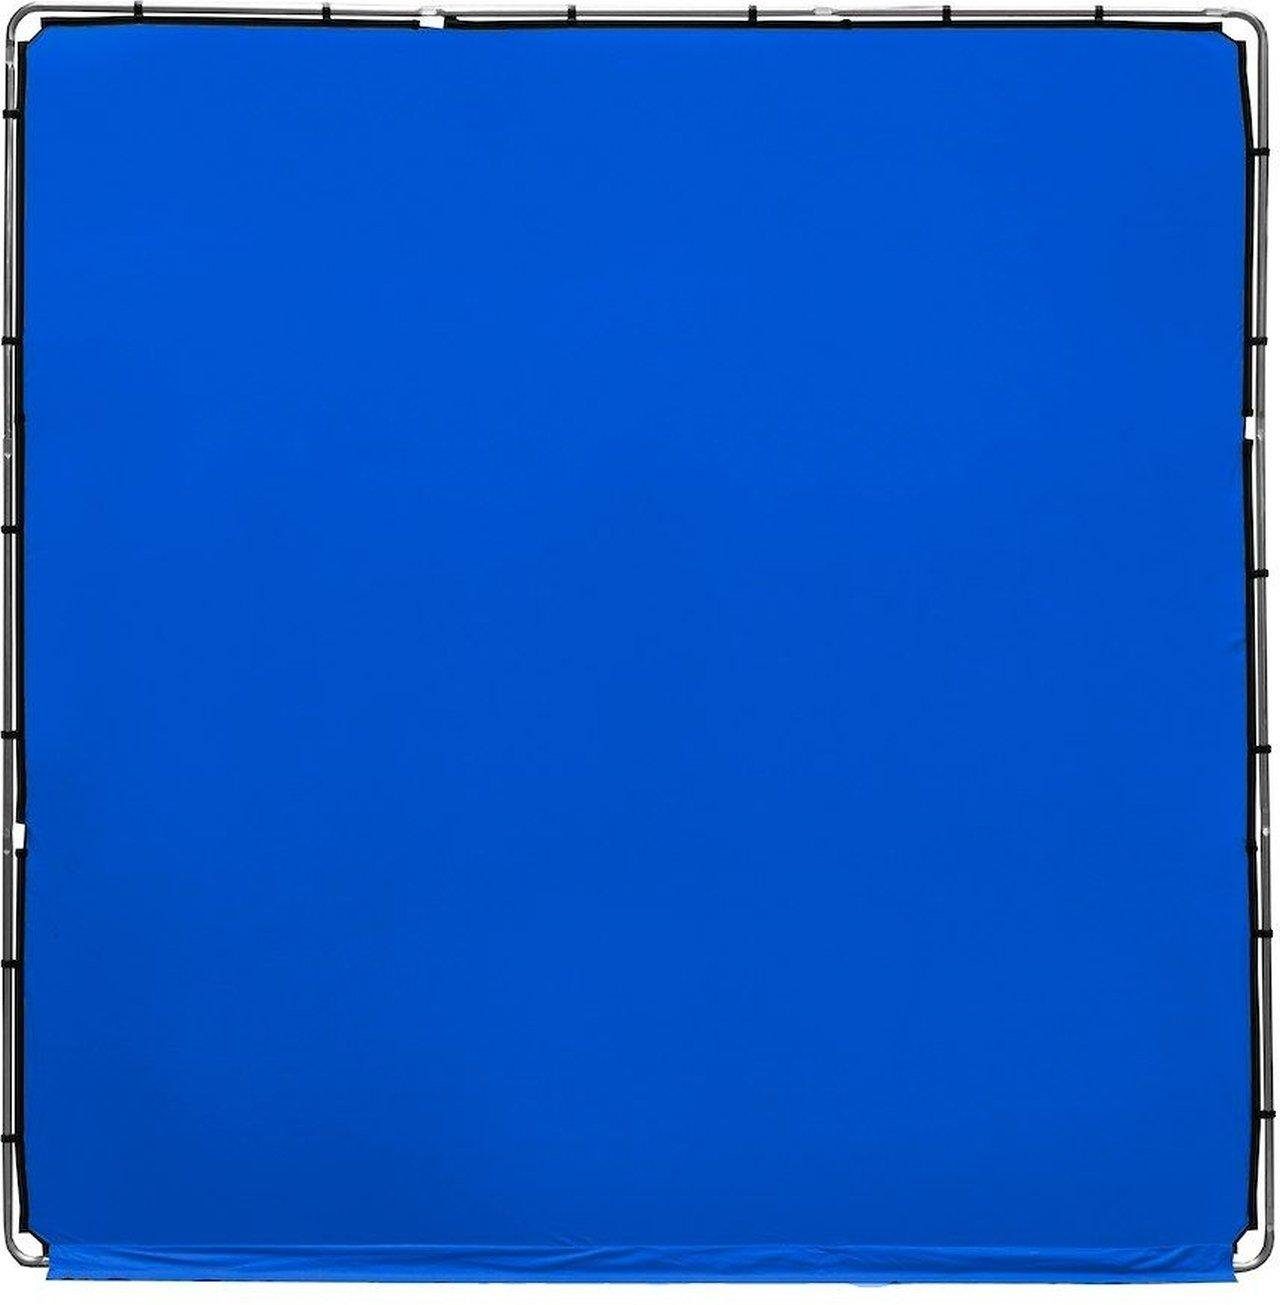 Manfrotto LR83352 StudioLink Chroma Key Blue Screen Kit 3x3m Objektivzubehör